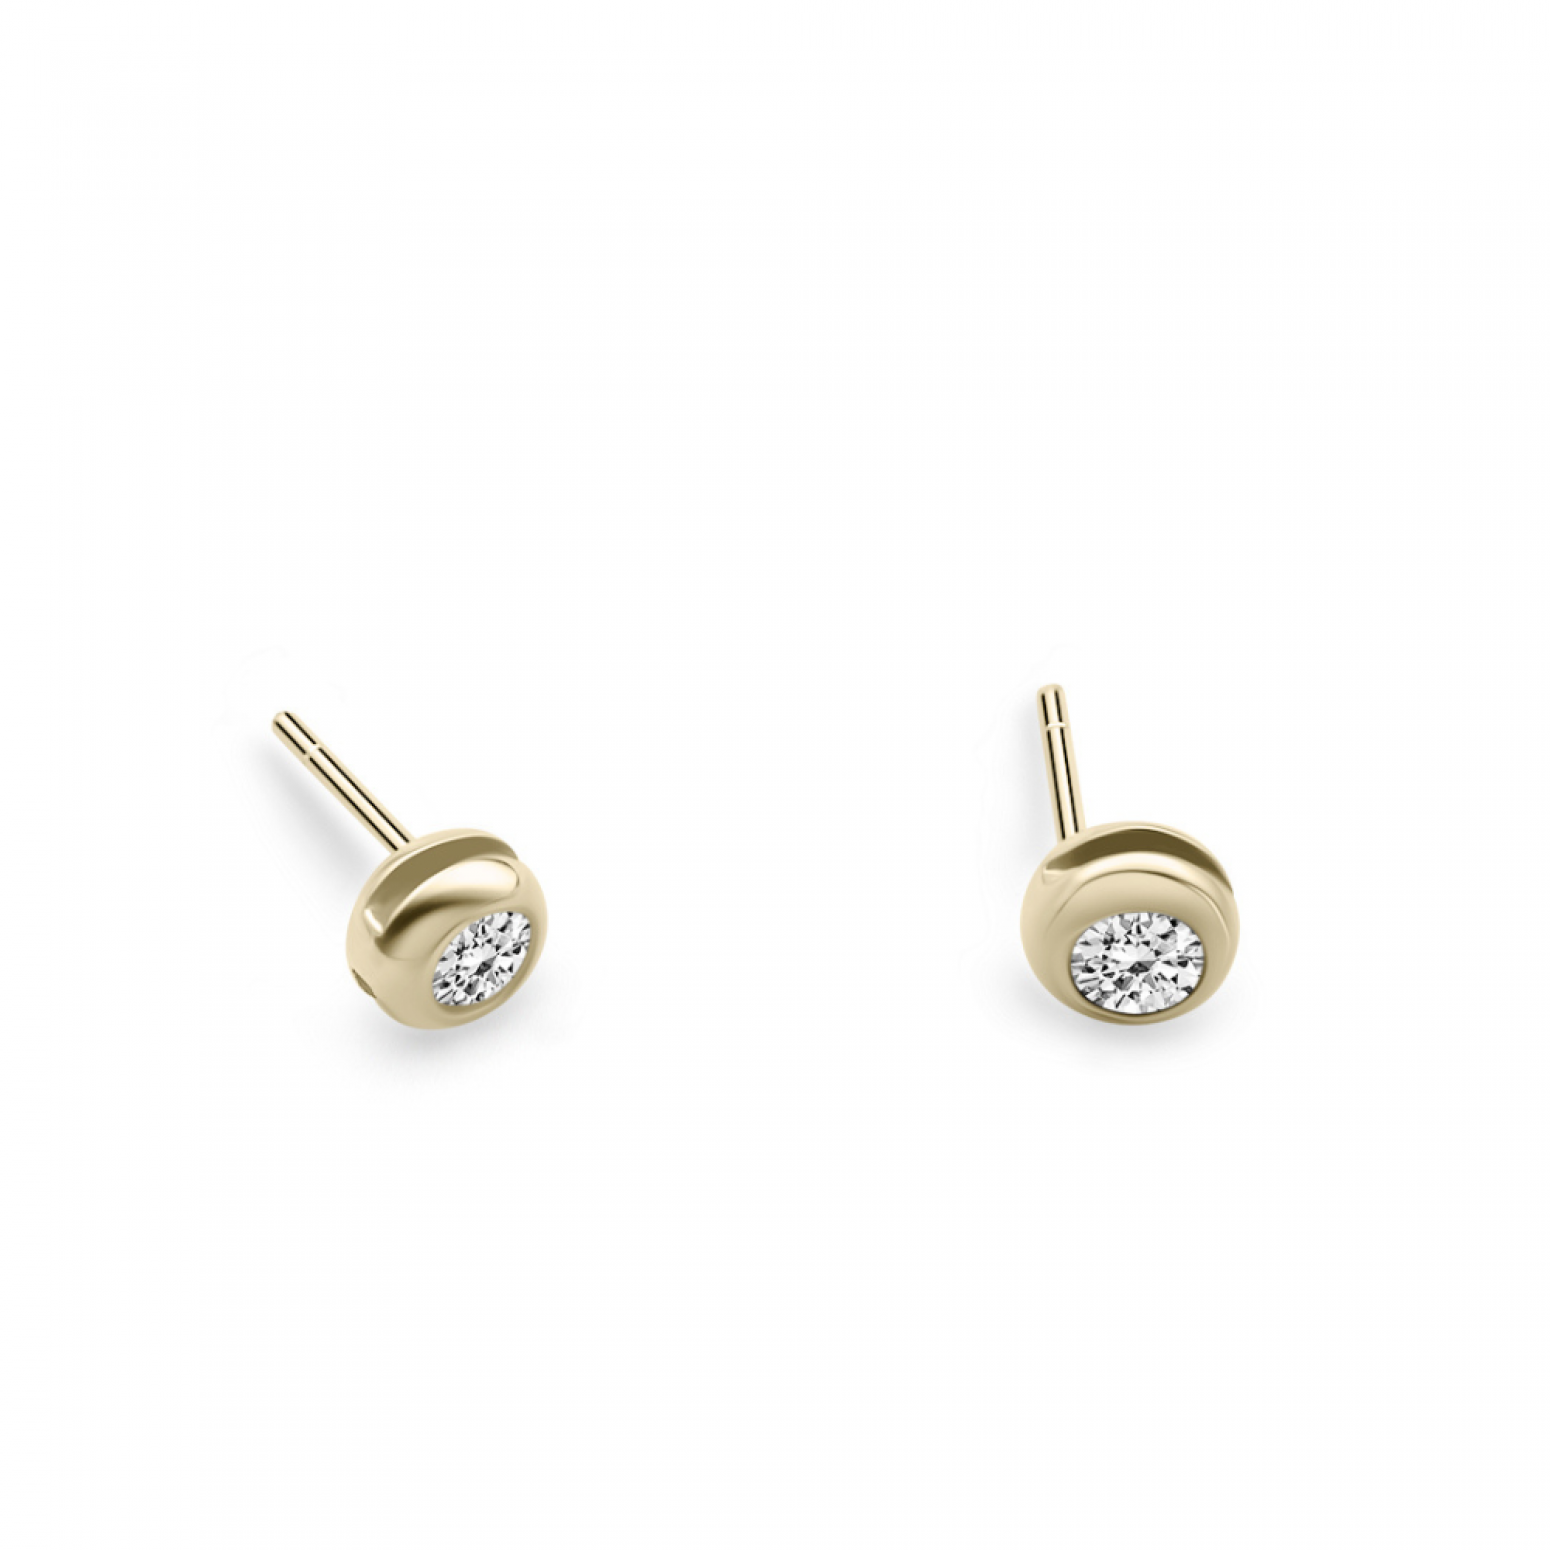 Solitaire earrings 9K gold with zircon, sk4126 EARRINGS Κοσμηματα - chrilia.gr